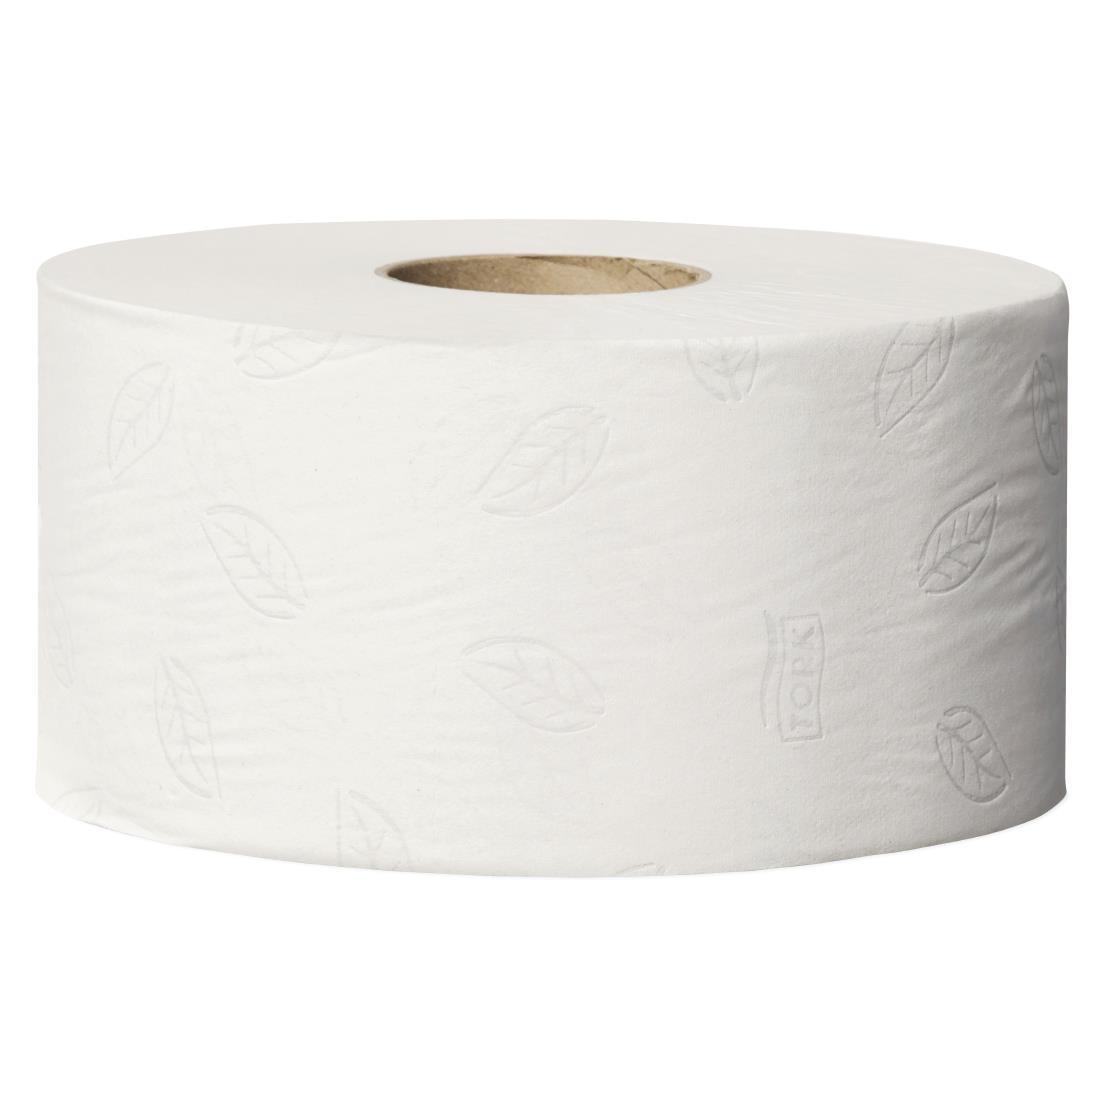 Tork Mini Jumbo Toilet Paper 2-Ply 170m (Pack of 12) - CL126  - 1